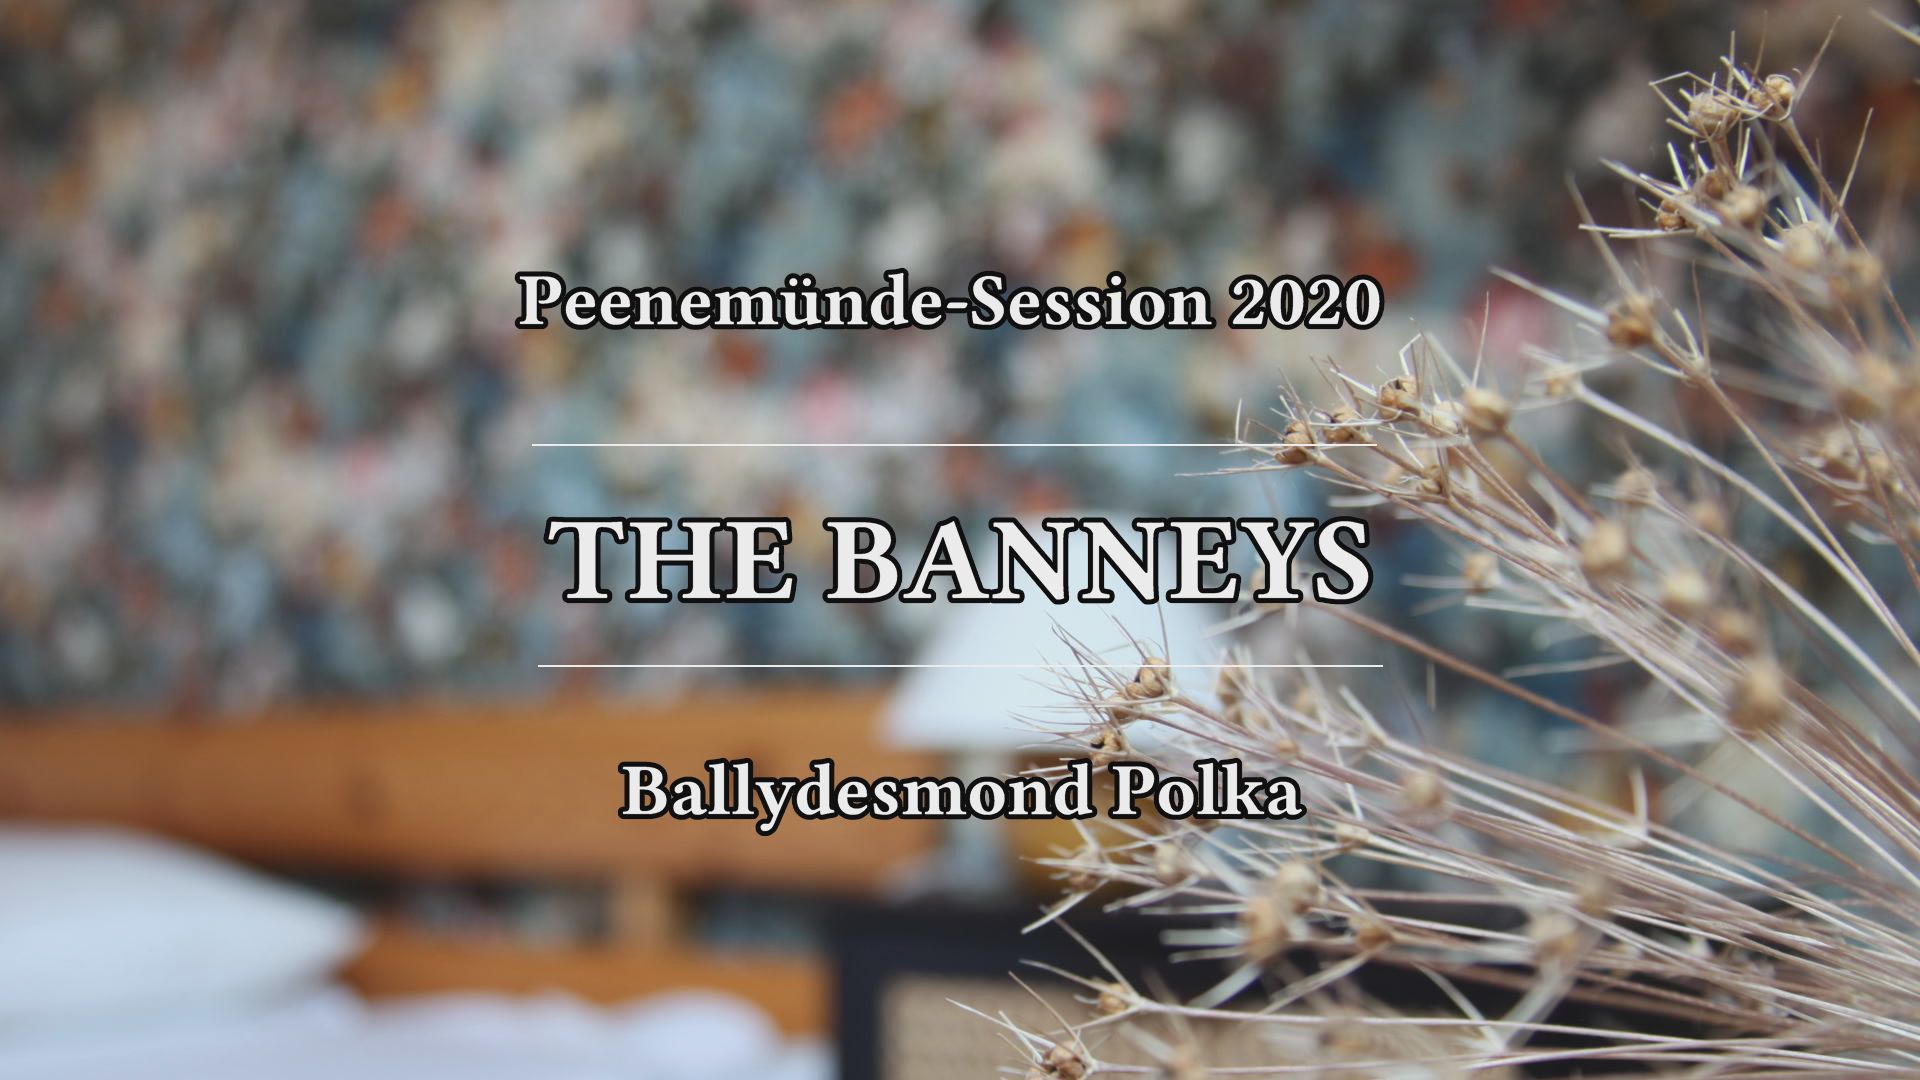 The Banneys - Ballydesmond Polka